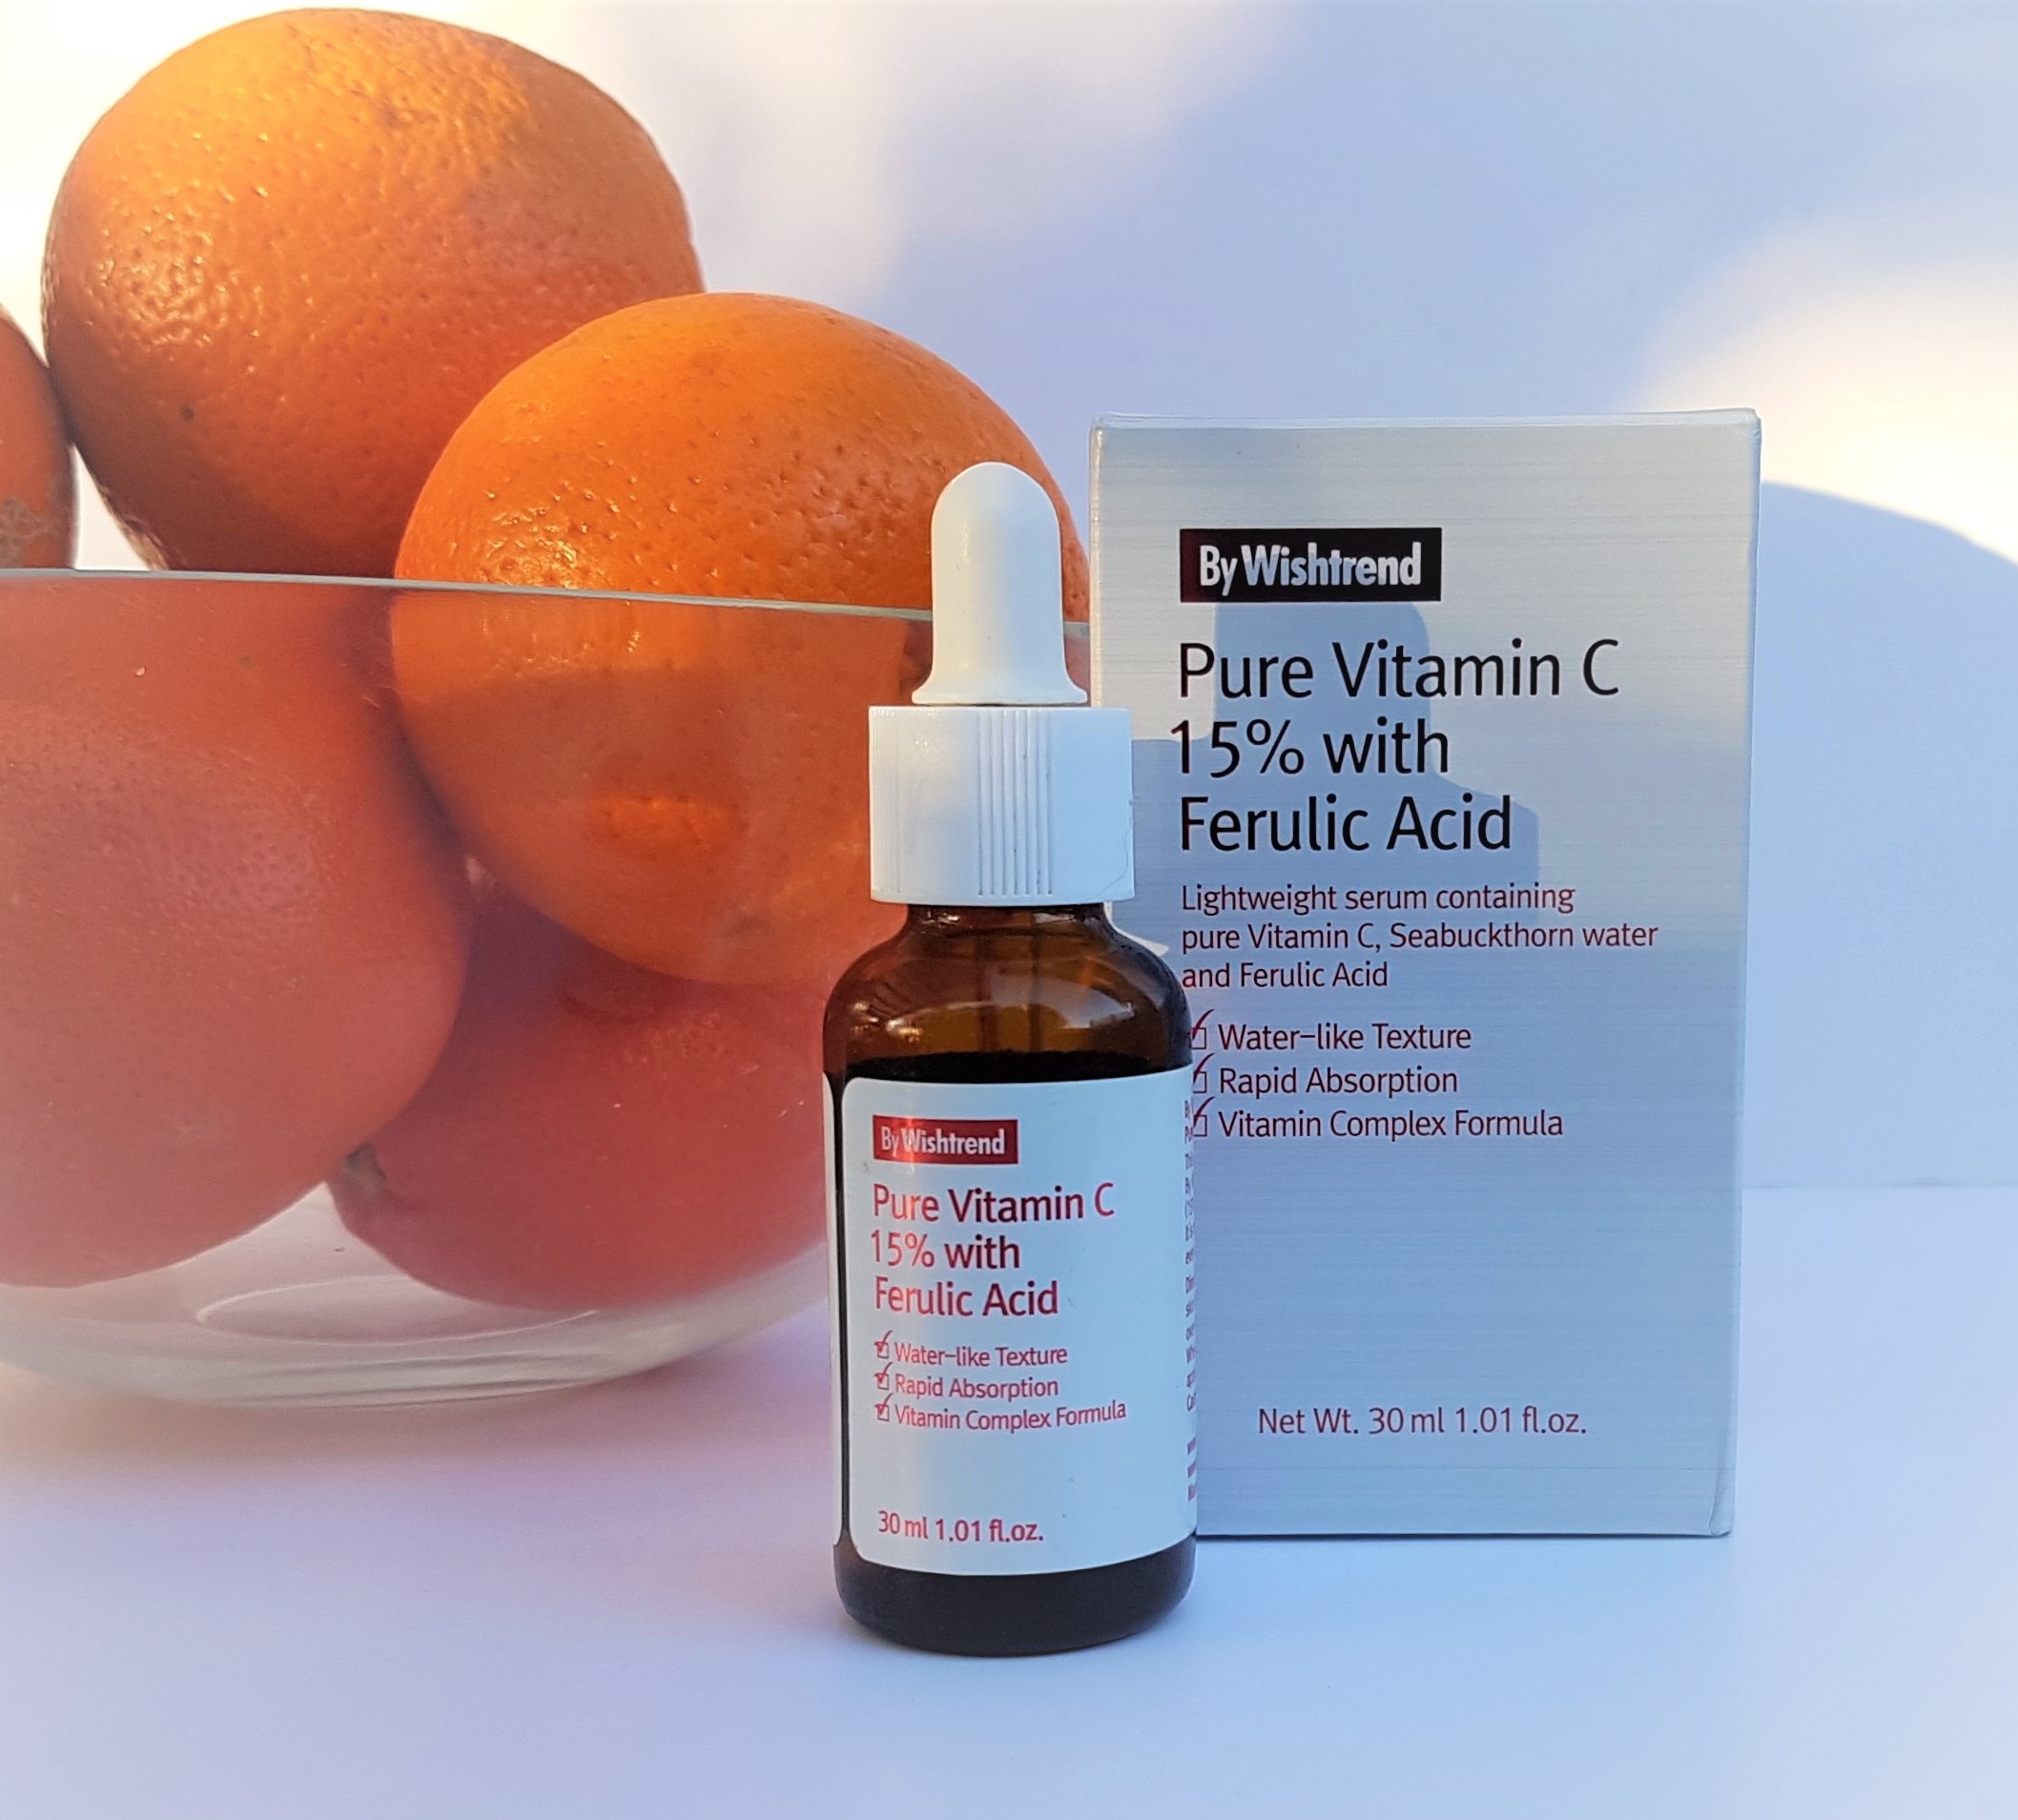 ByWishtrend Pure Vitamin C 15% with Ferulic Acid Serum